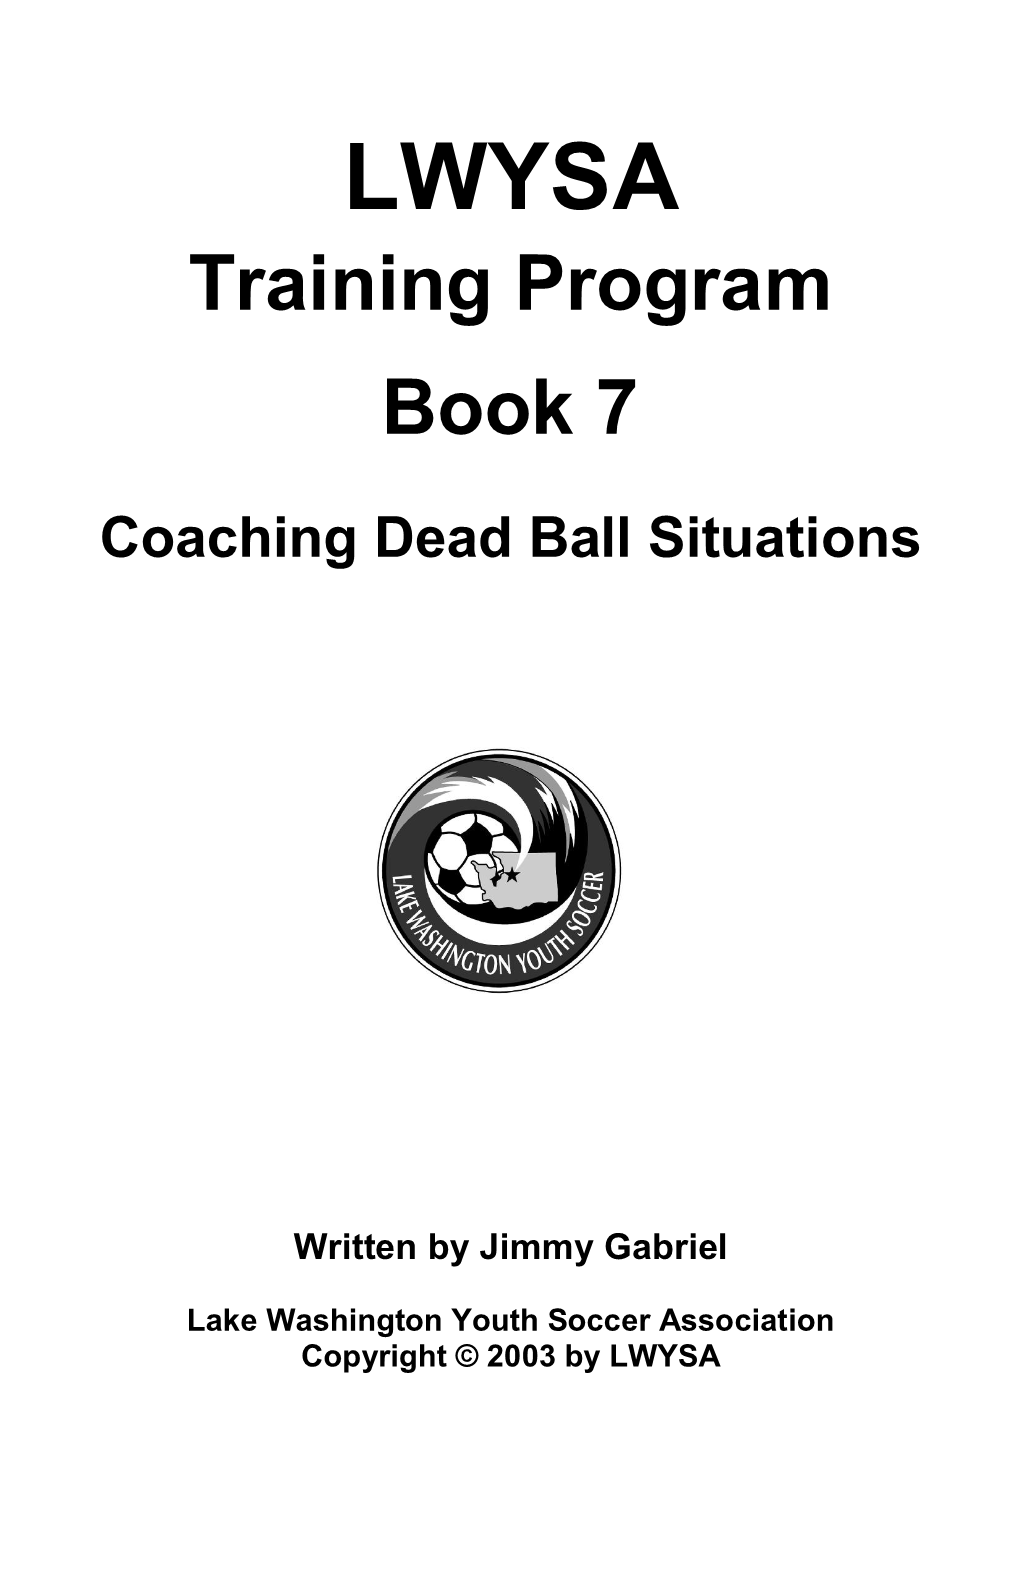 Training Program Book 7